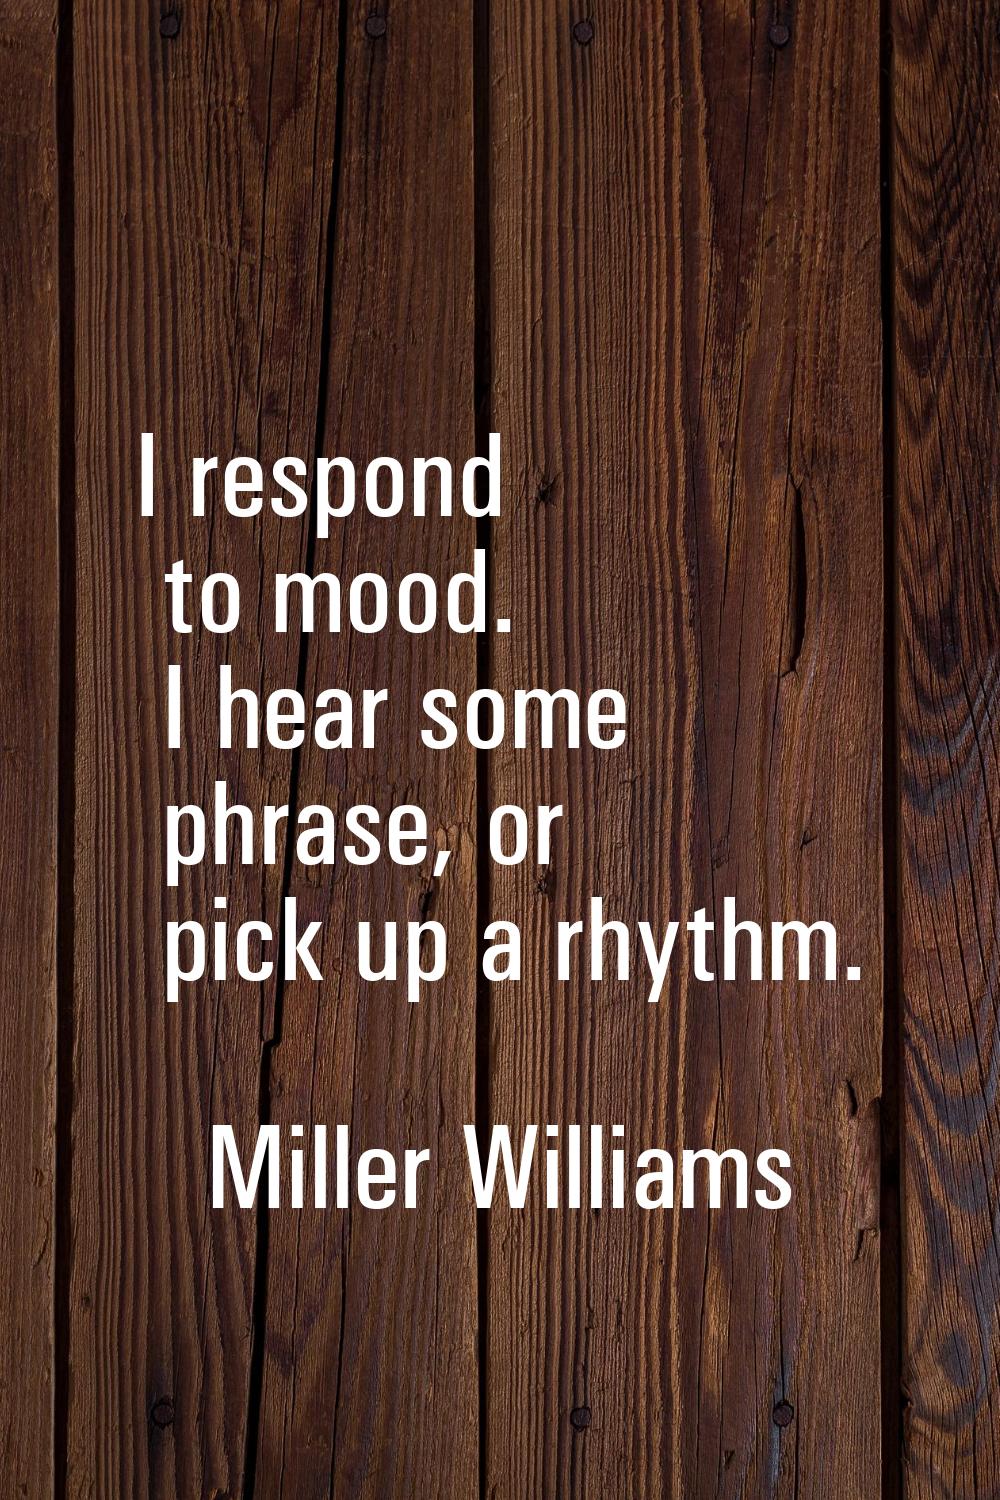 I respond to mood. I hear some phrase, or pick up a rhythm.